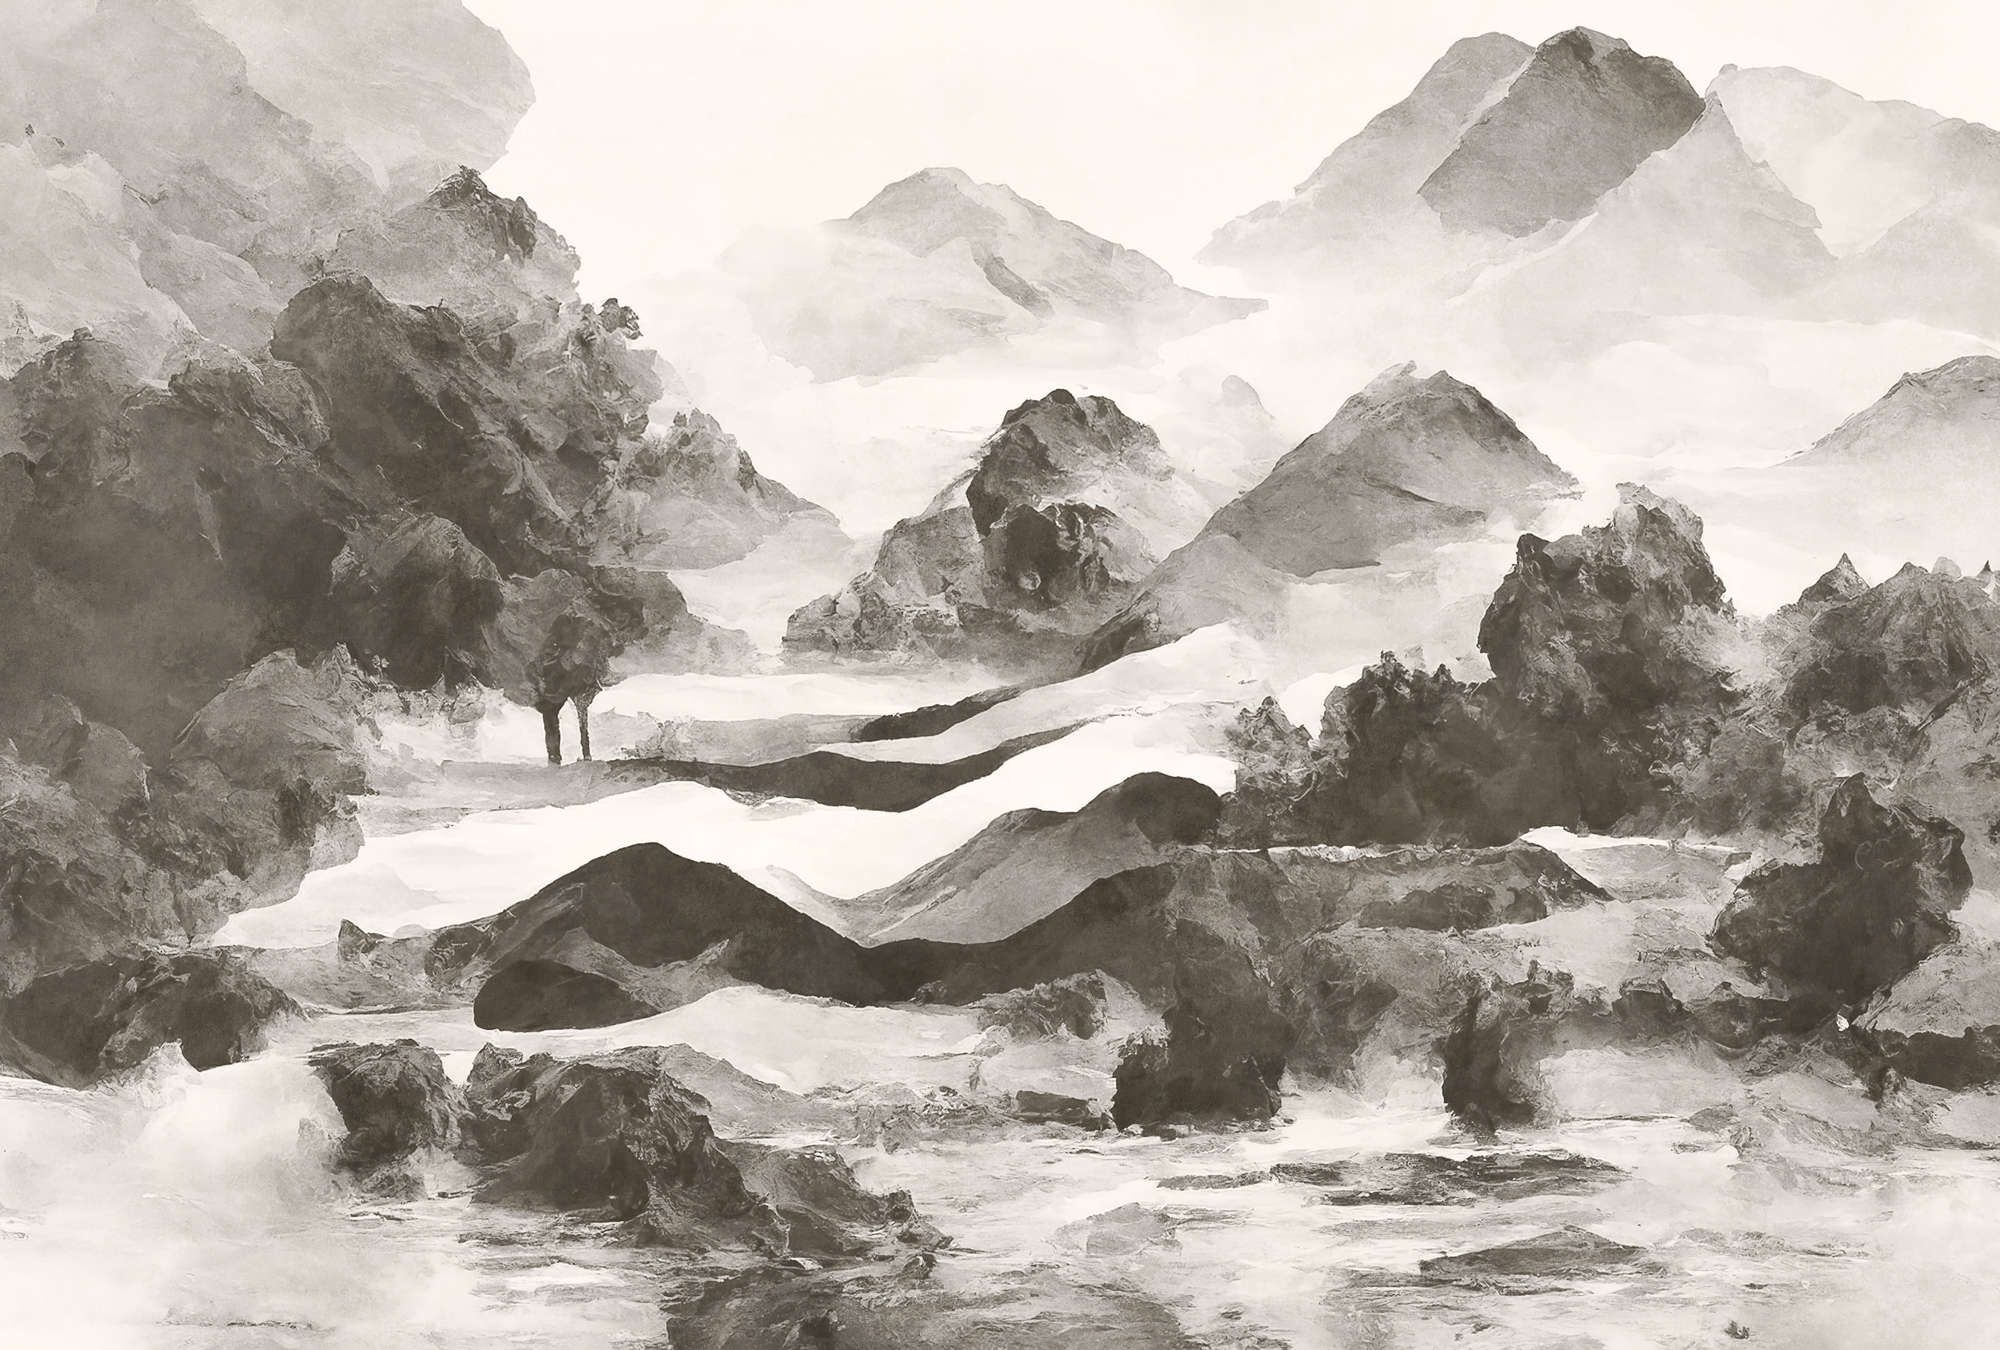             Digital behang »tinterra 1« - Landschap met bergen & mist - Grijs | Gladde, licht parelmoerglanzende vliesstof
        